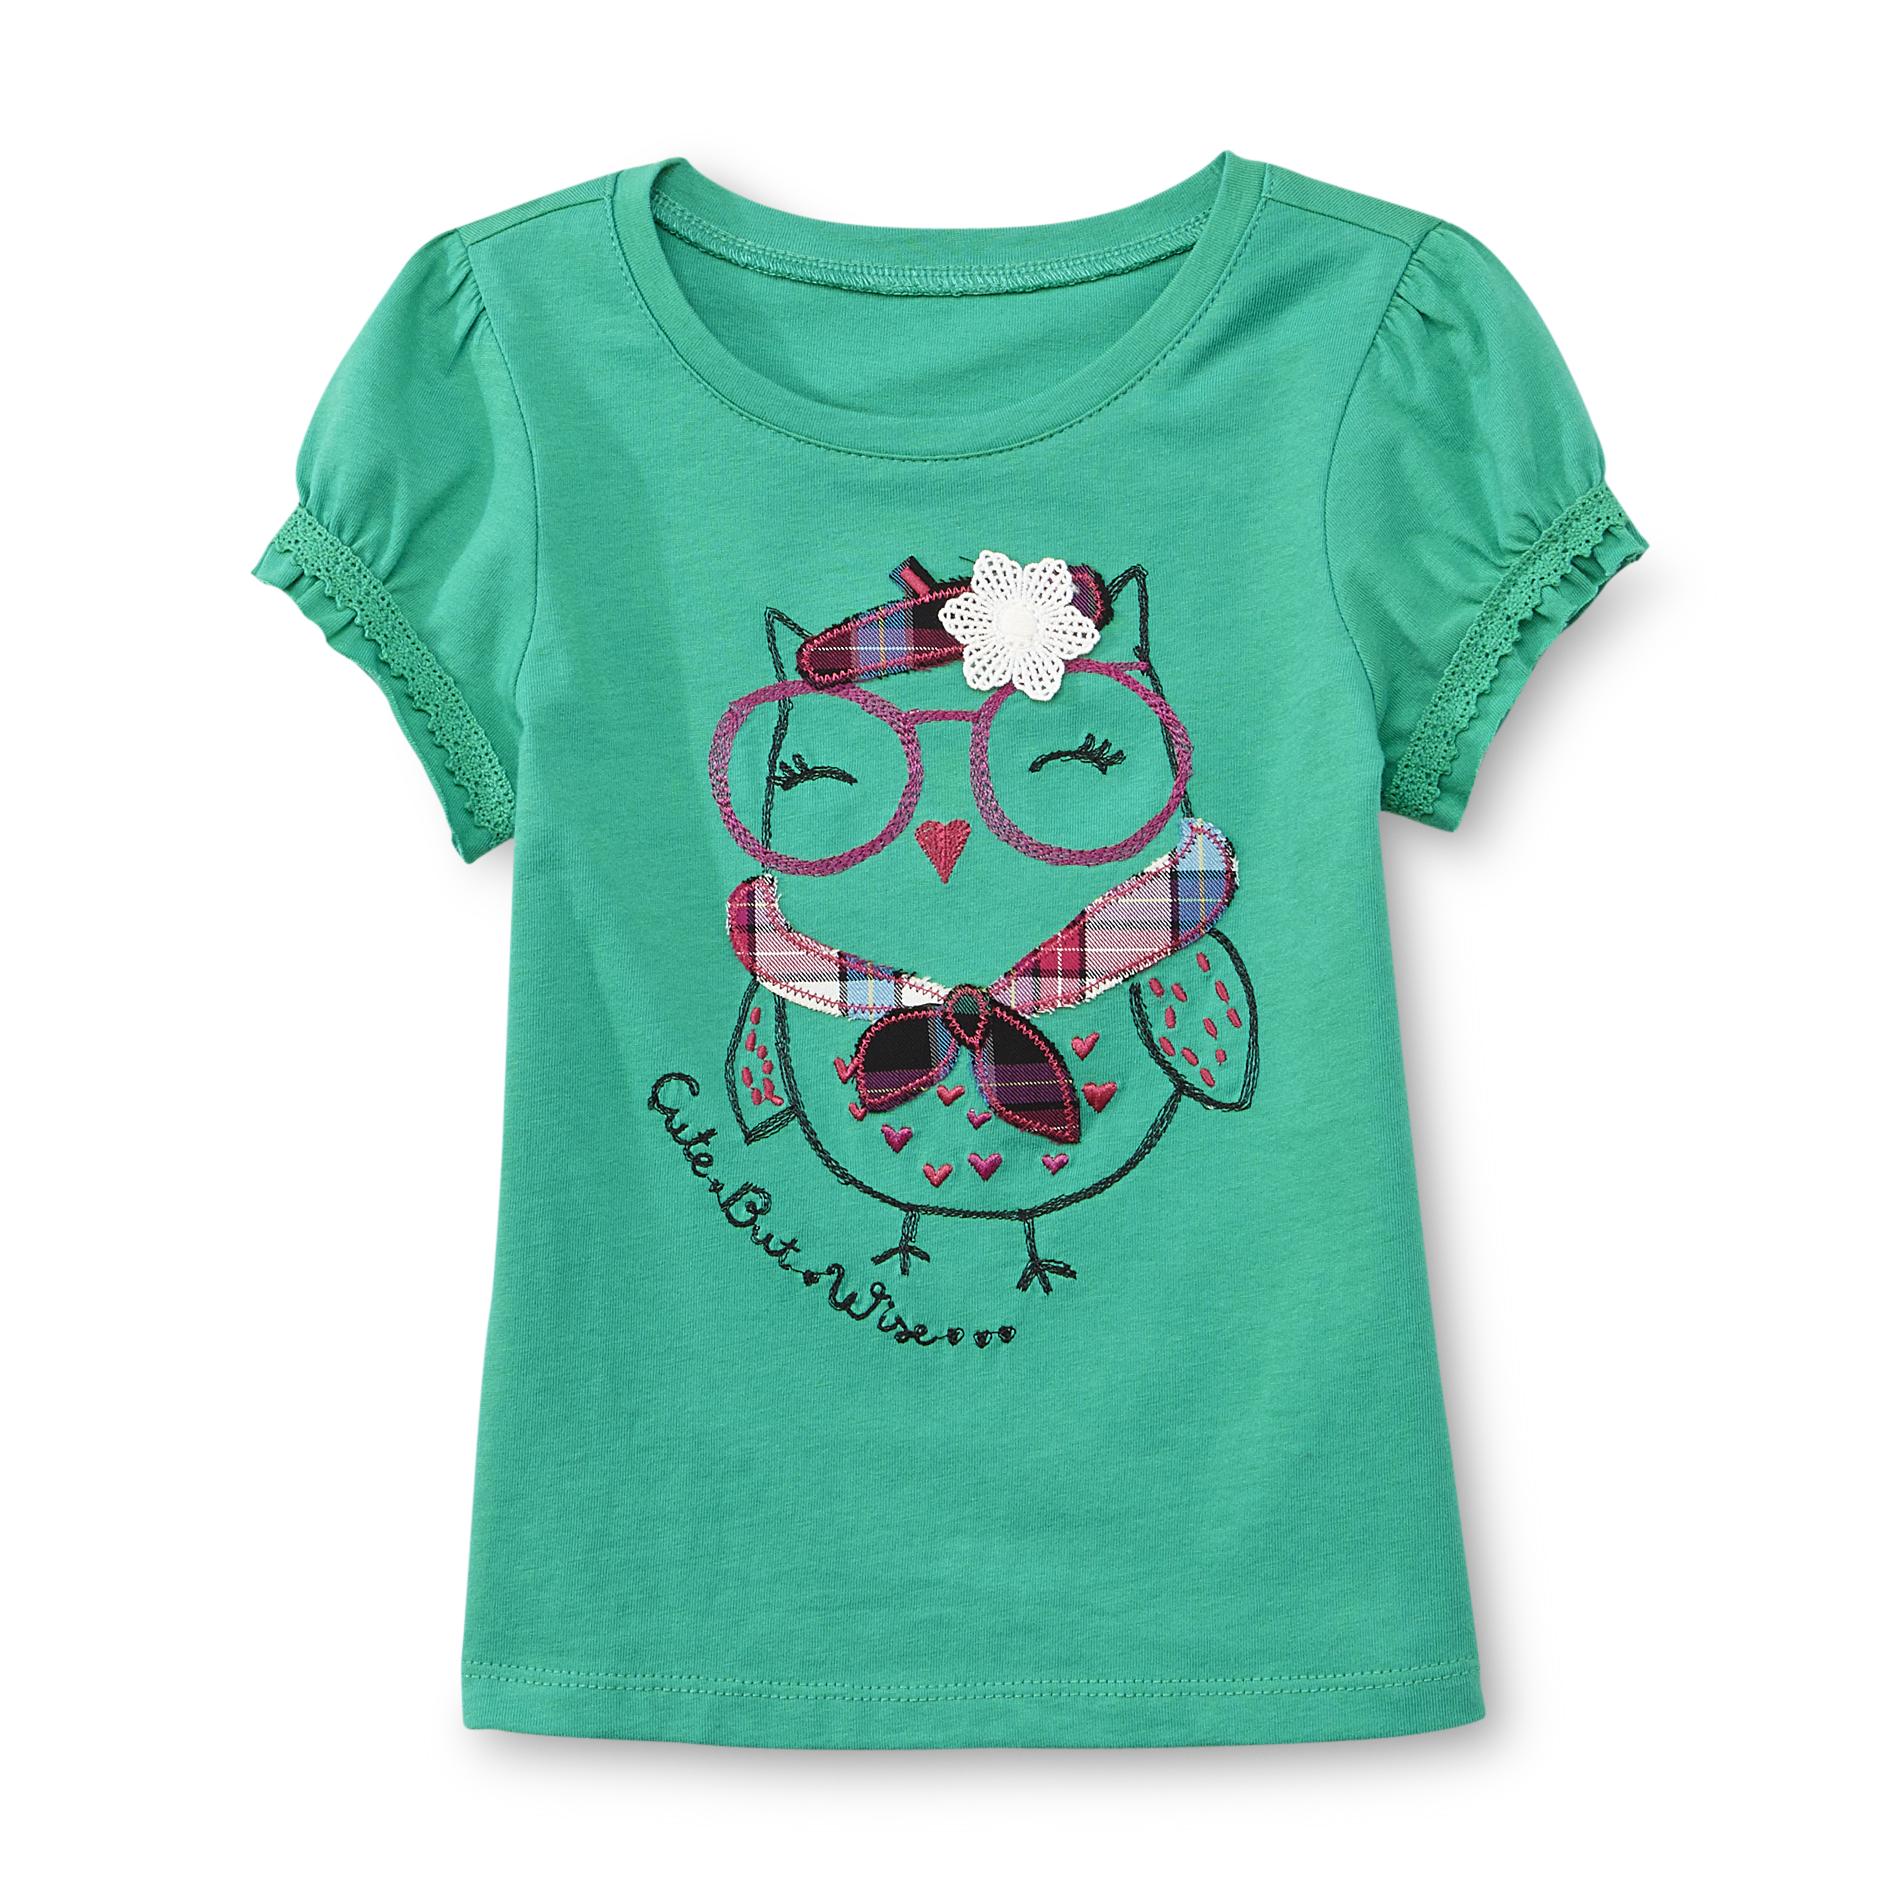 Toughskins Girl's Cap Sleeve T-Shirt - Owl